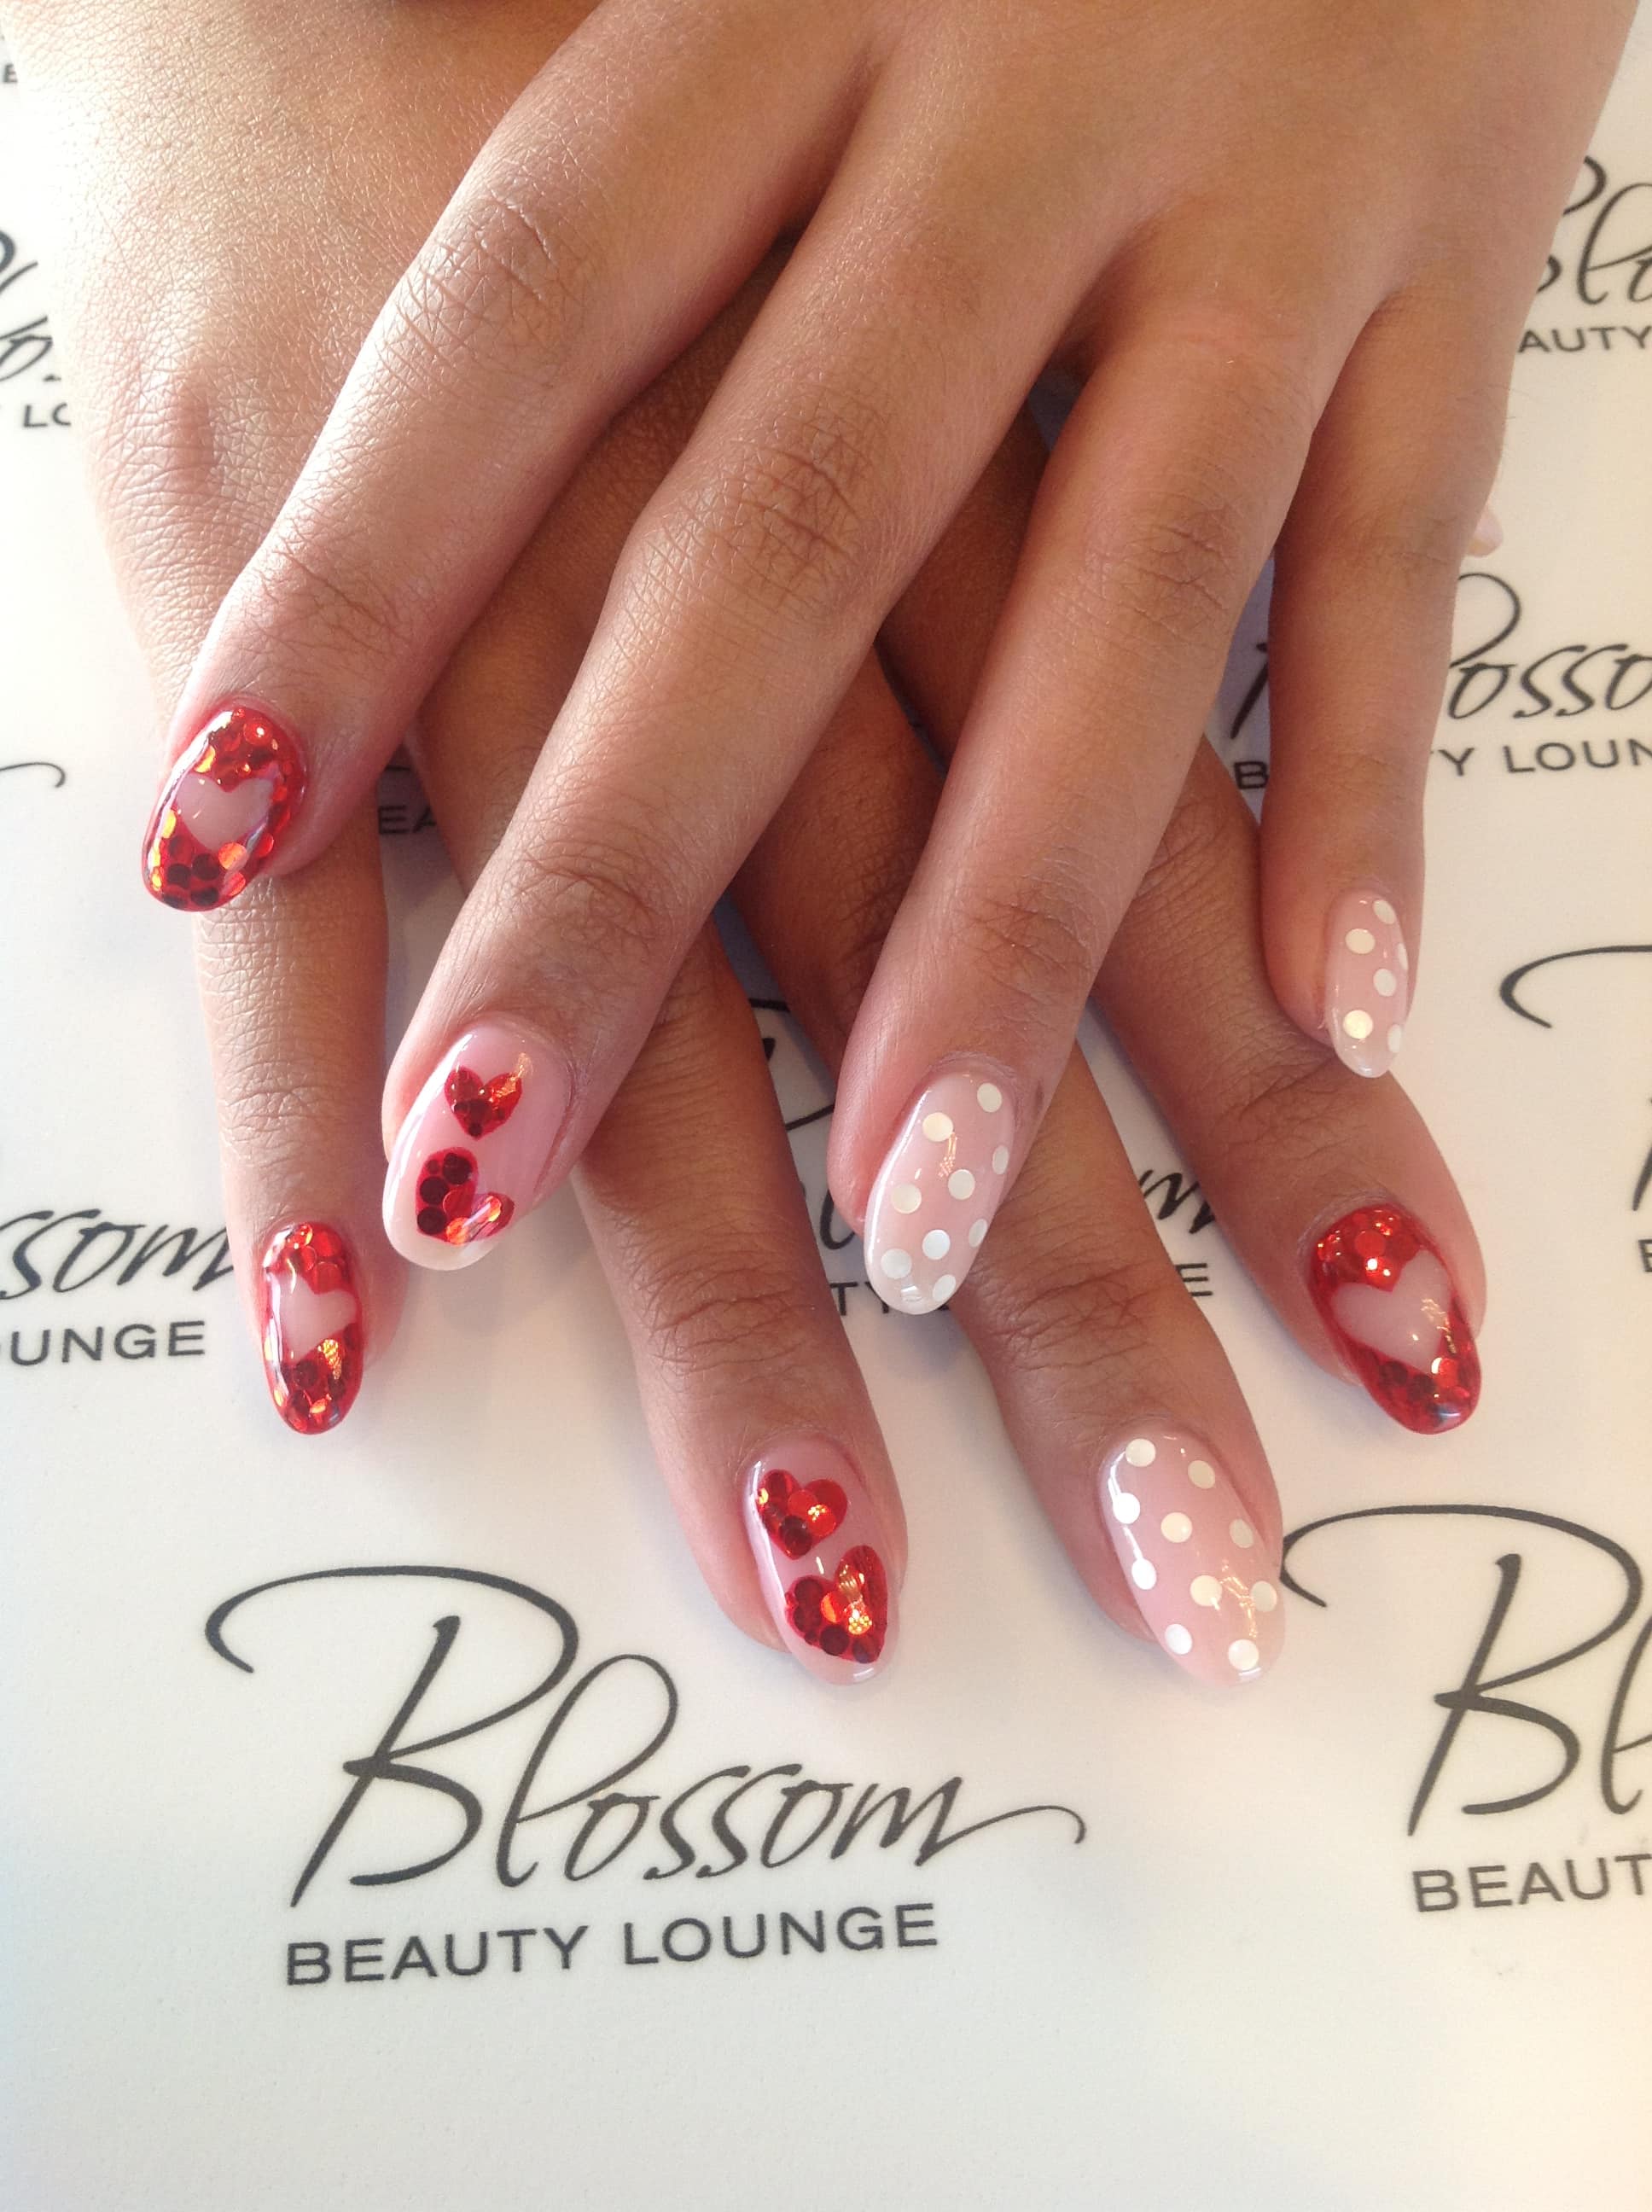 Blossom Beauty Lounge Valentine's Day nail art